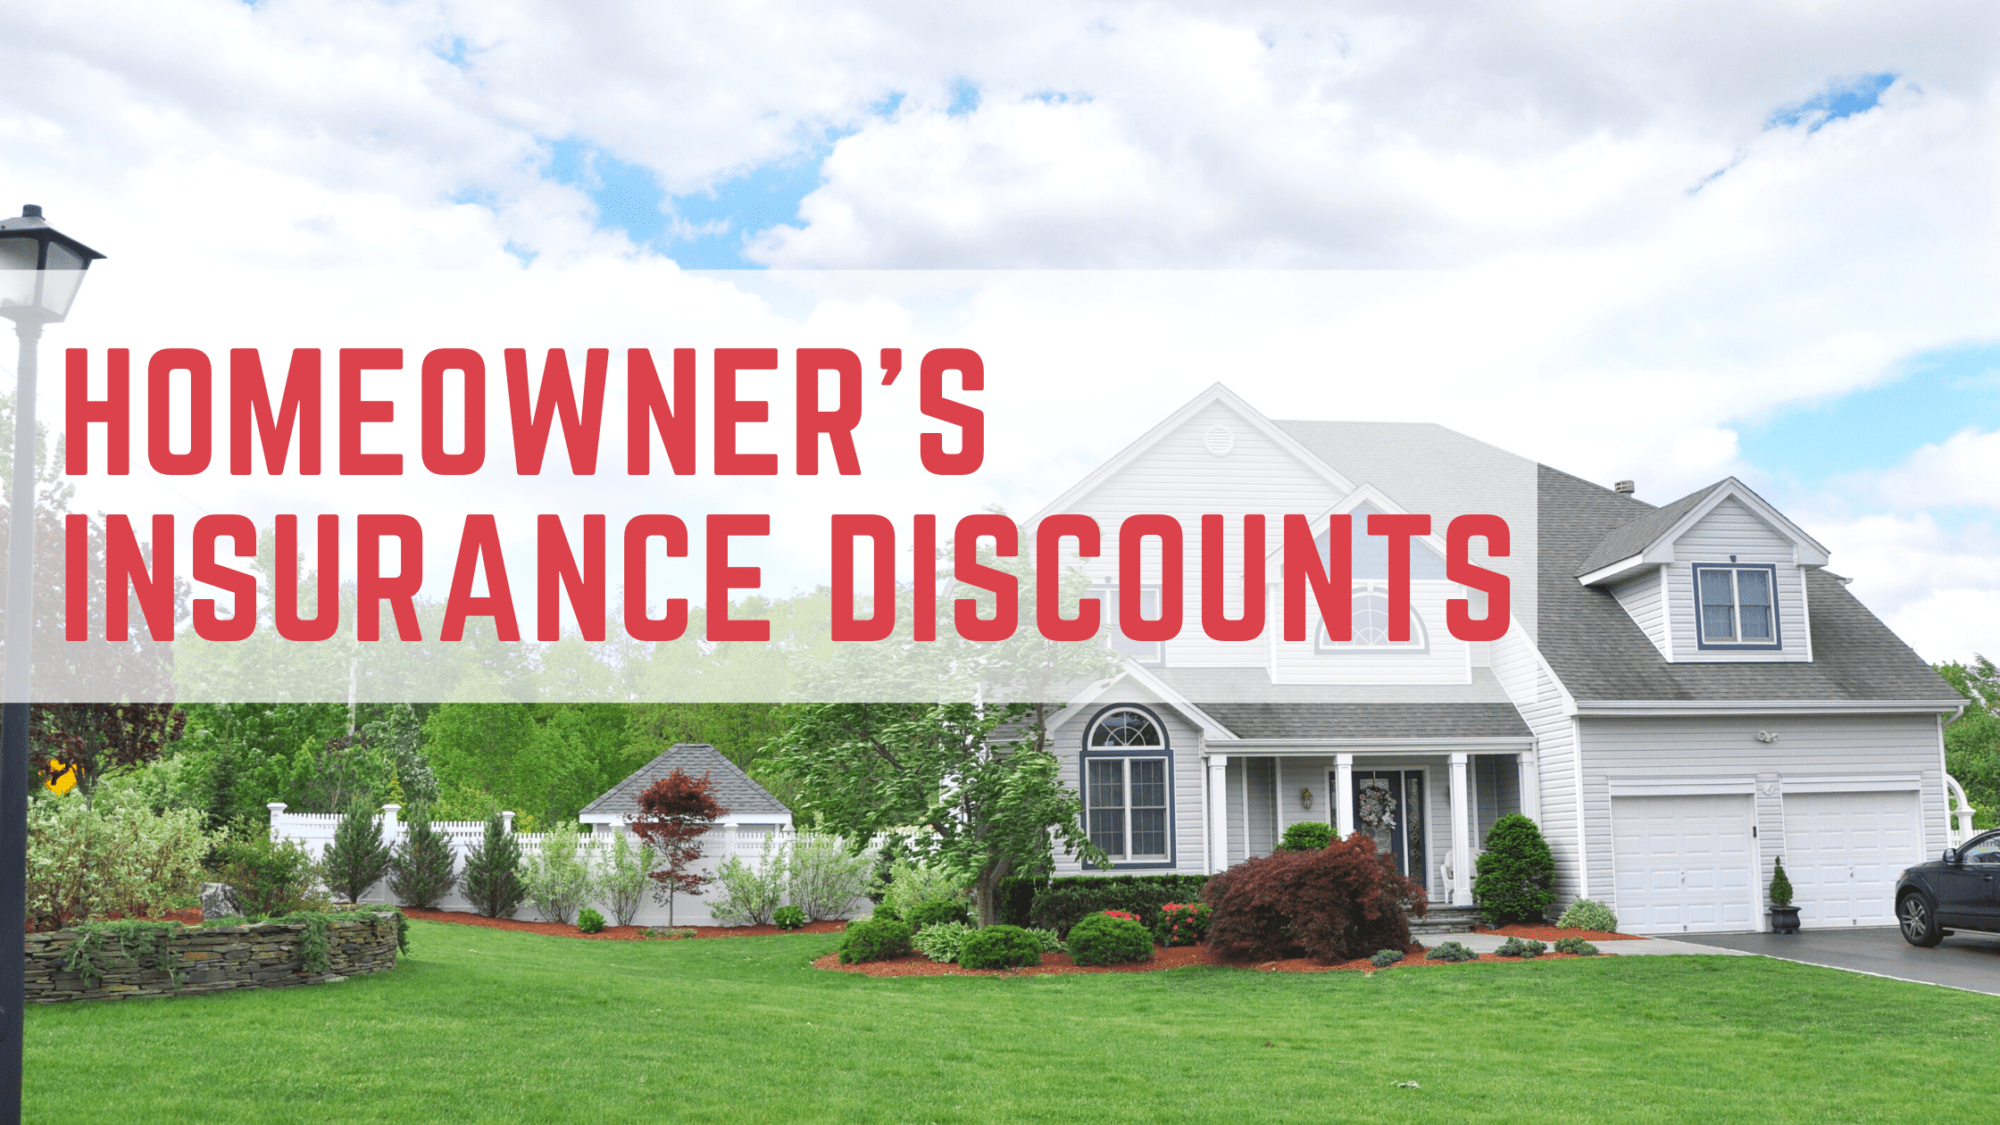 Home in in Georgia representing Homeowners Insurance Discounts